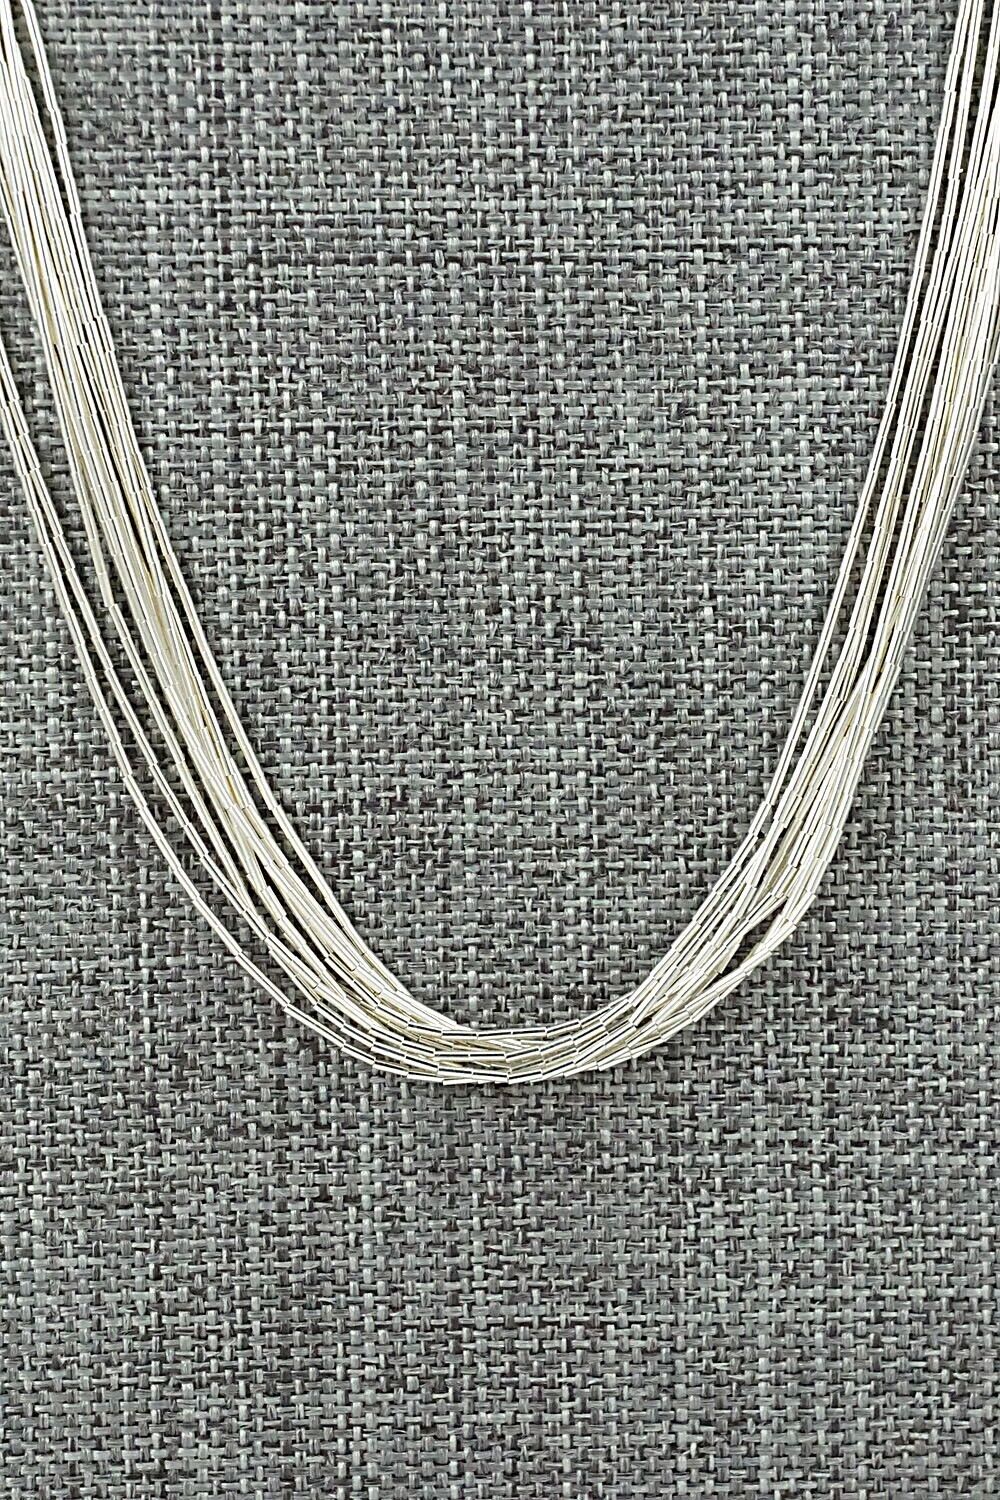 Liquid Silver Chain Necklace - Sterling Silver 30"